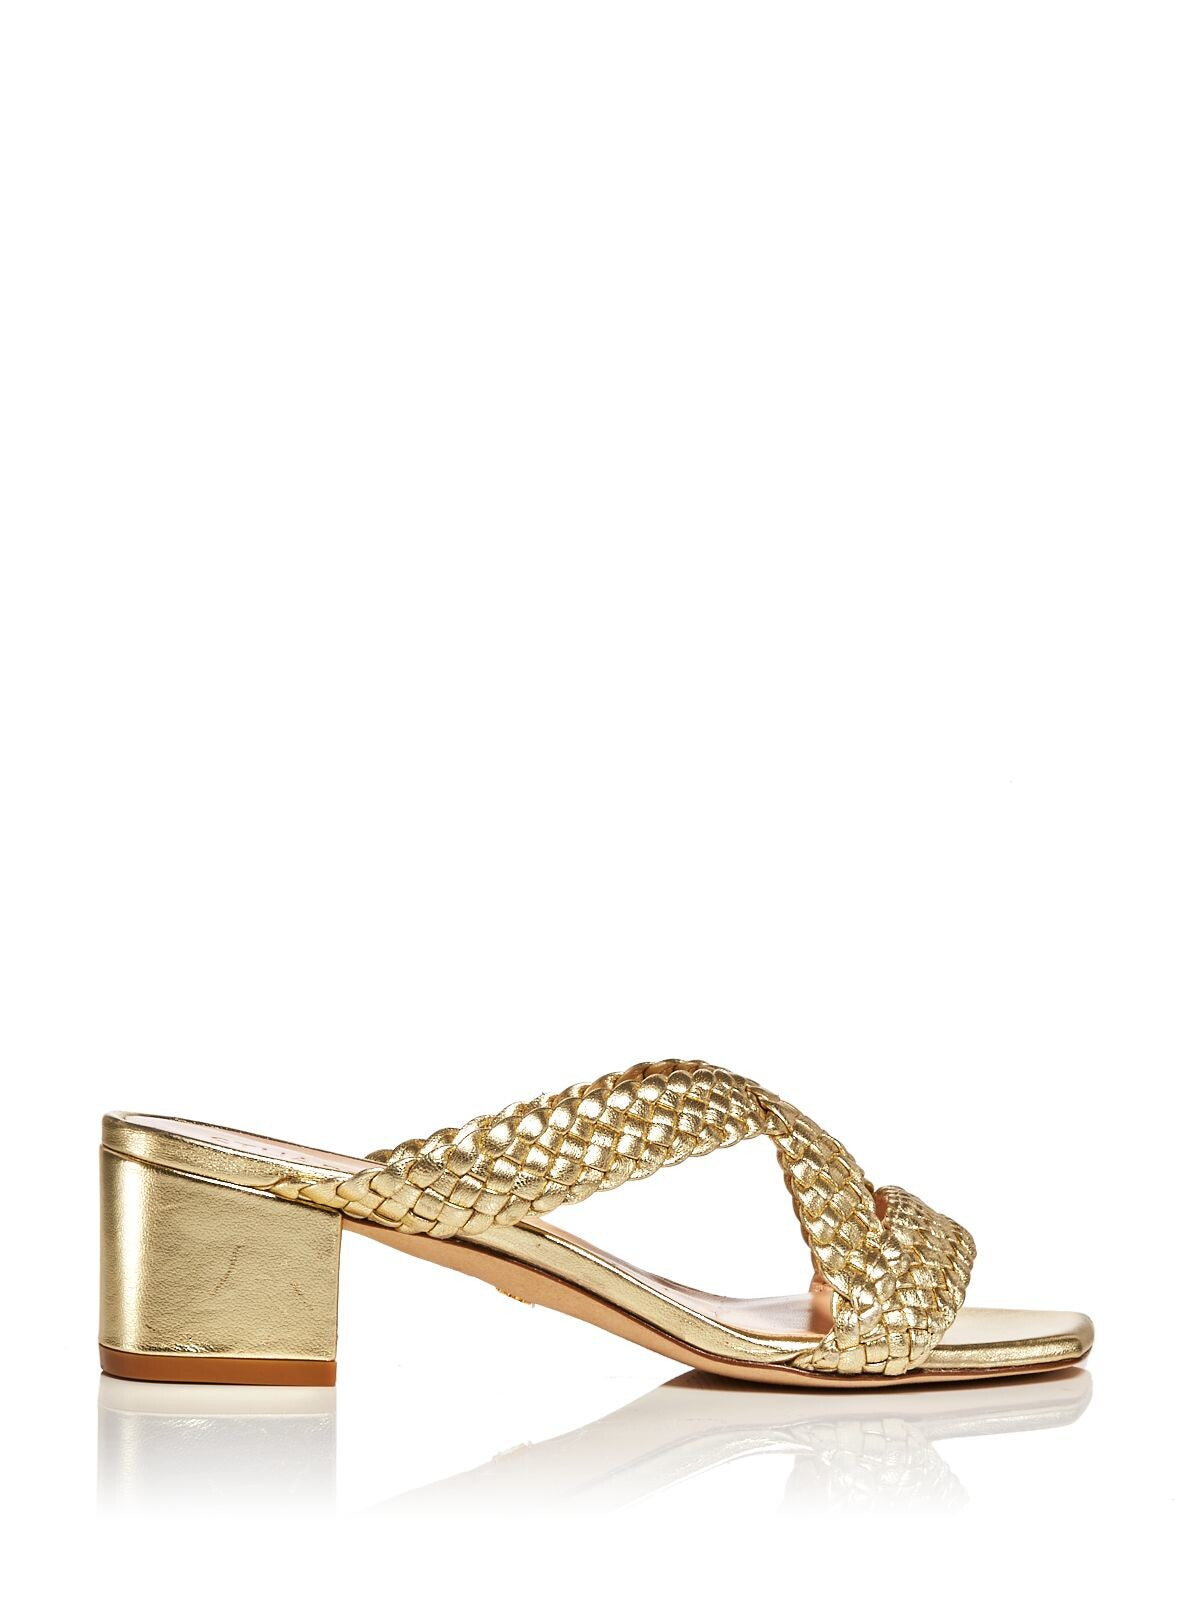 STUART WEITZMAN Womens Gold Metallic Rosie Square Toe Block Heel Slip On Leather Dress Slide Sandals Shoes 7